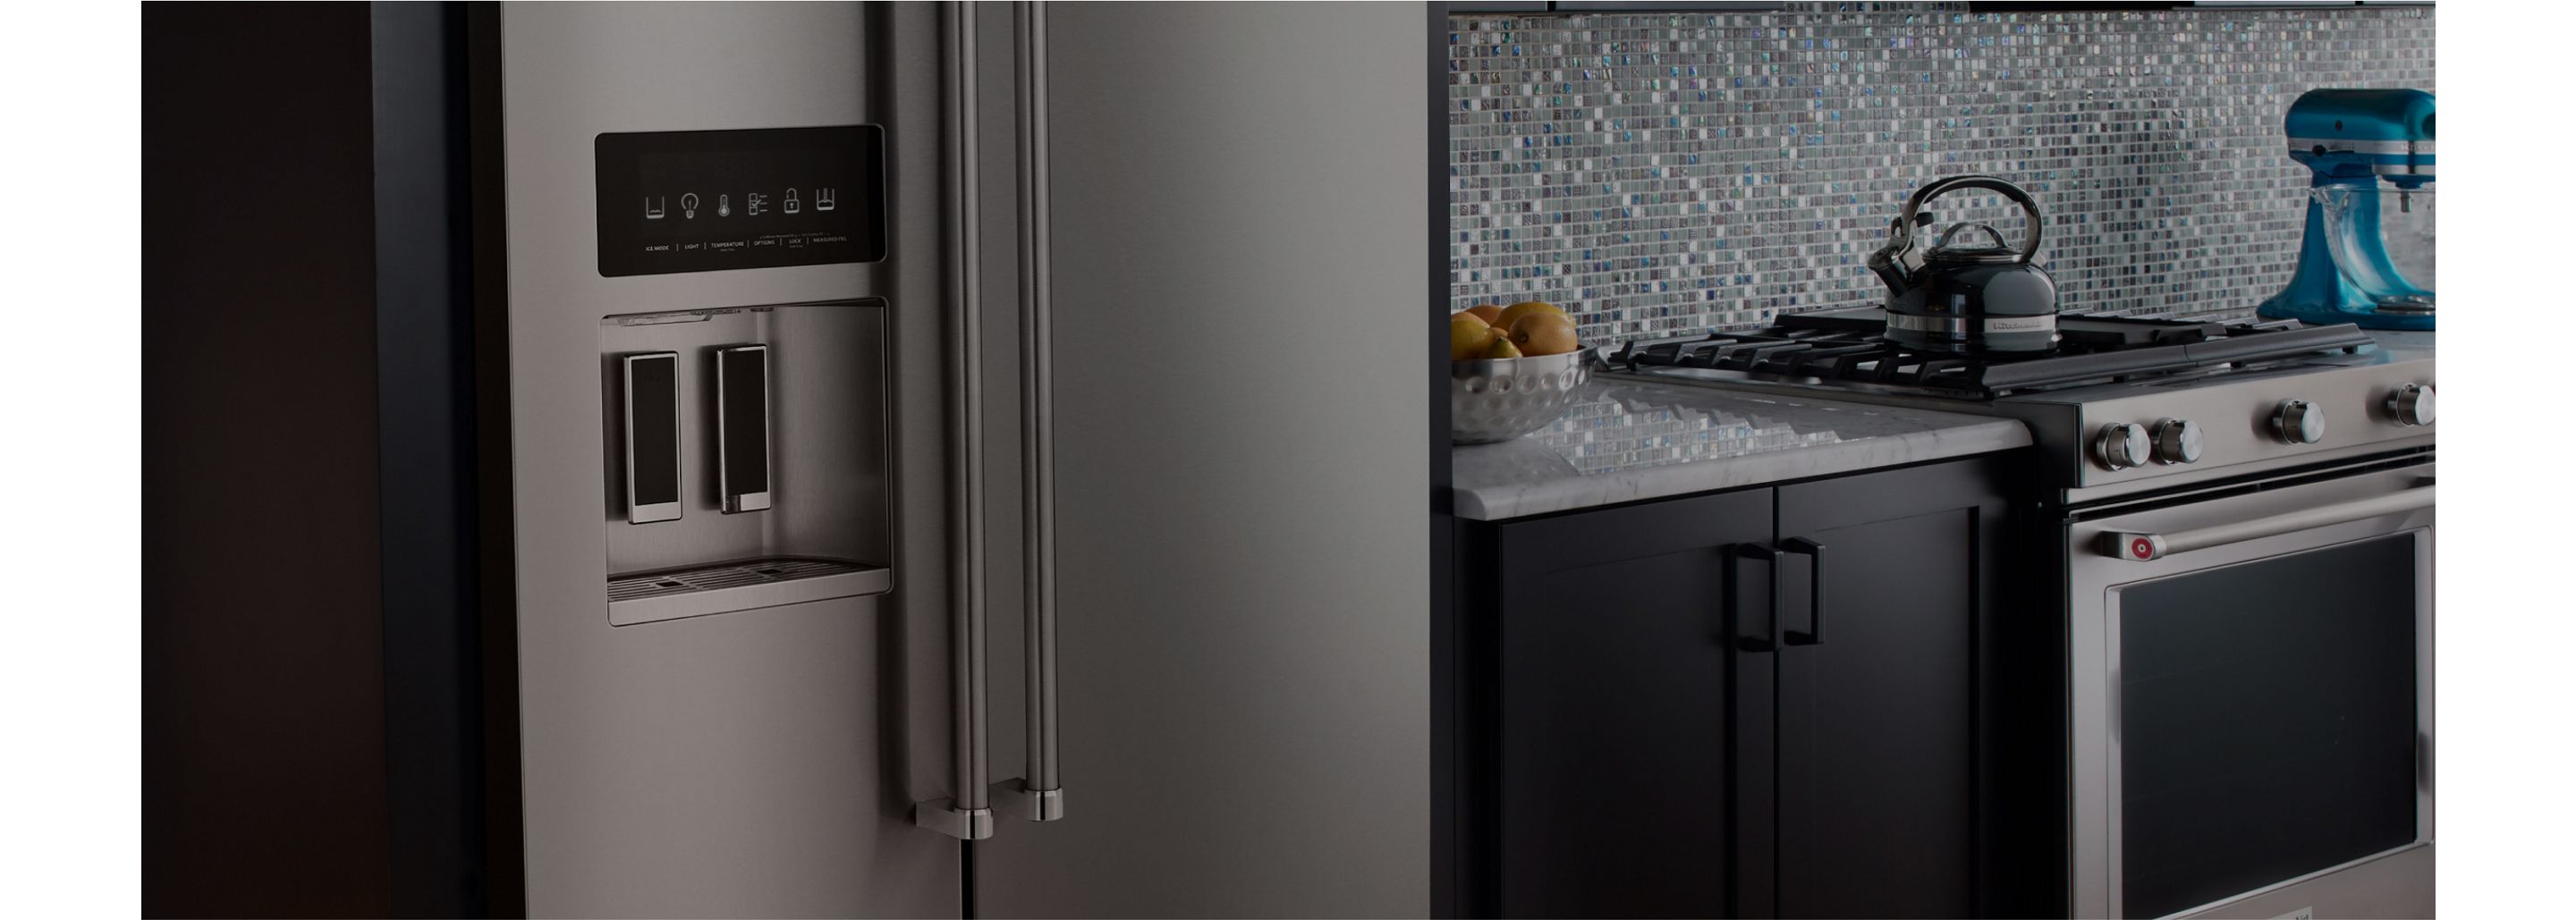 24++ Kitchenaid superba refrigerator model kscs25inss00 ideas